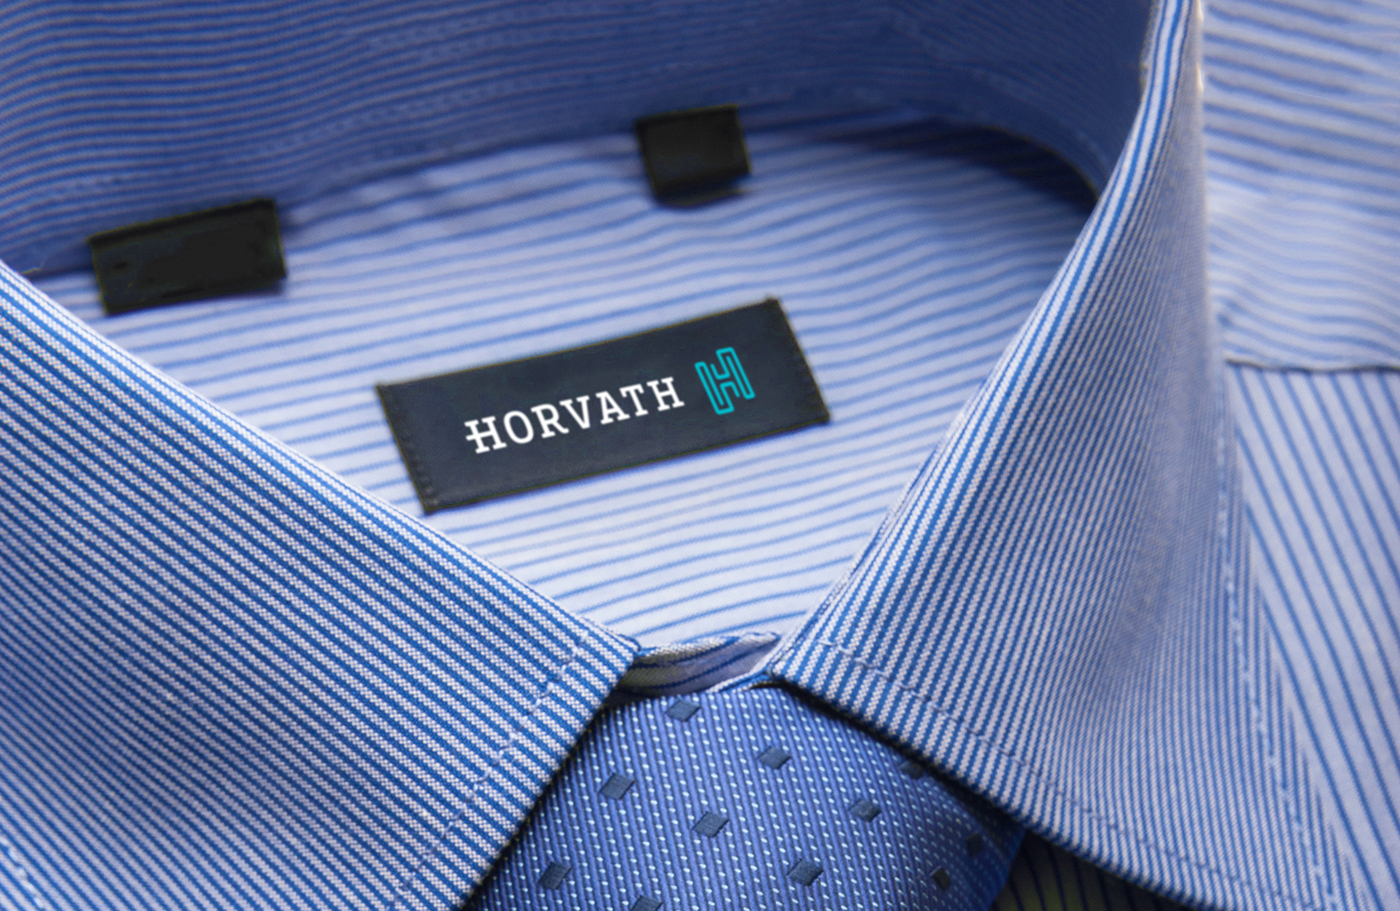 horvath visual identity High Tech work wear fashion brand